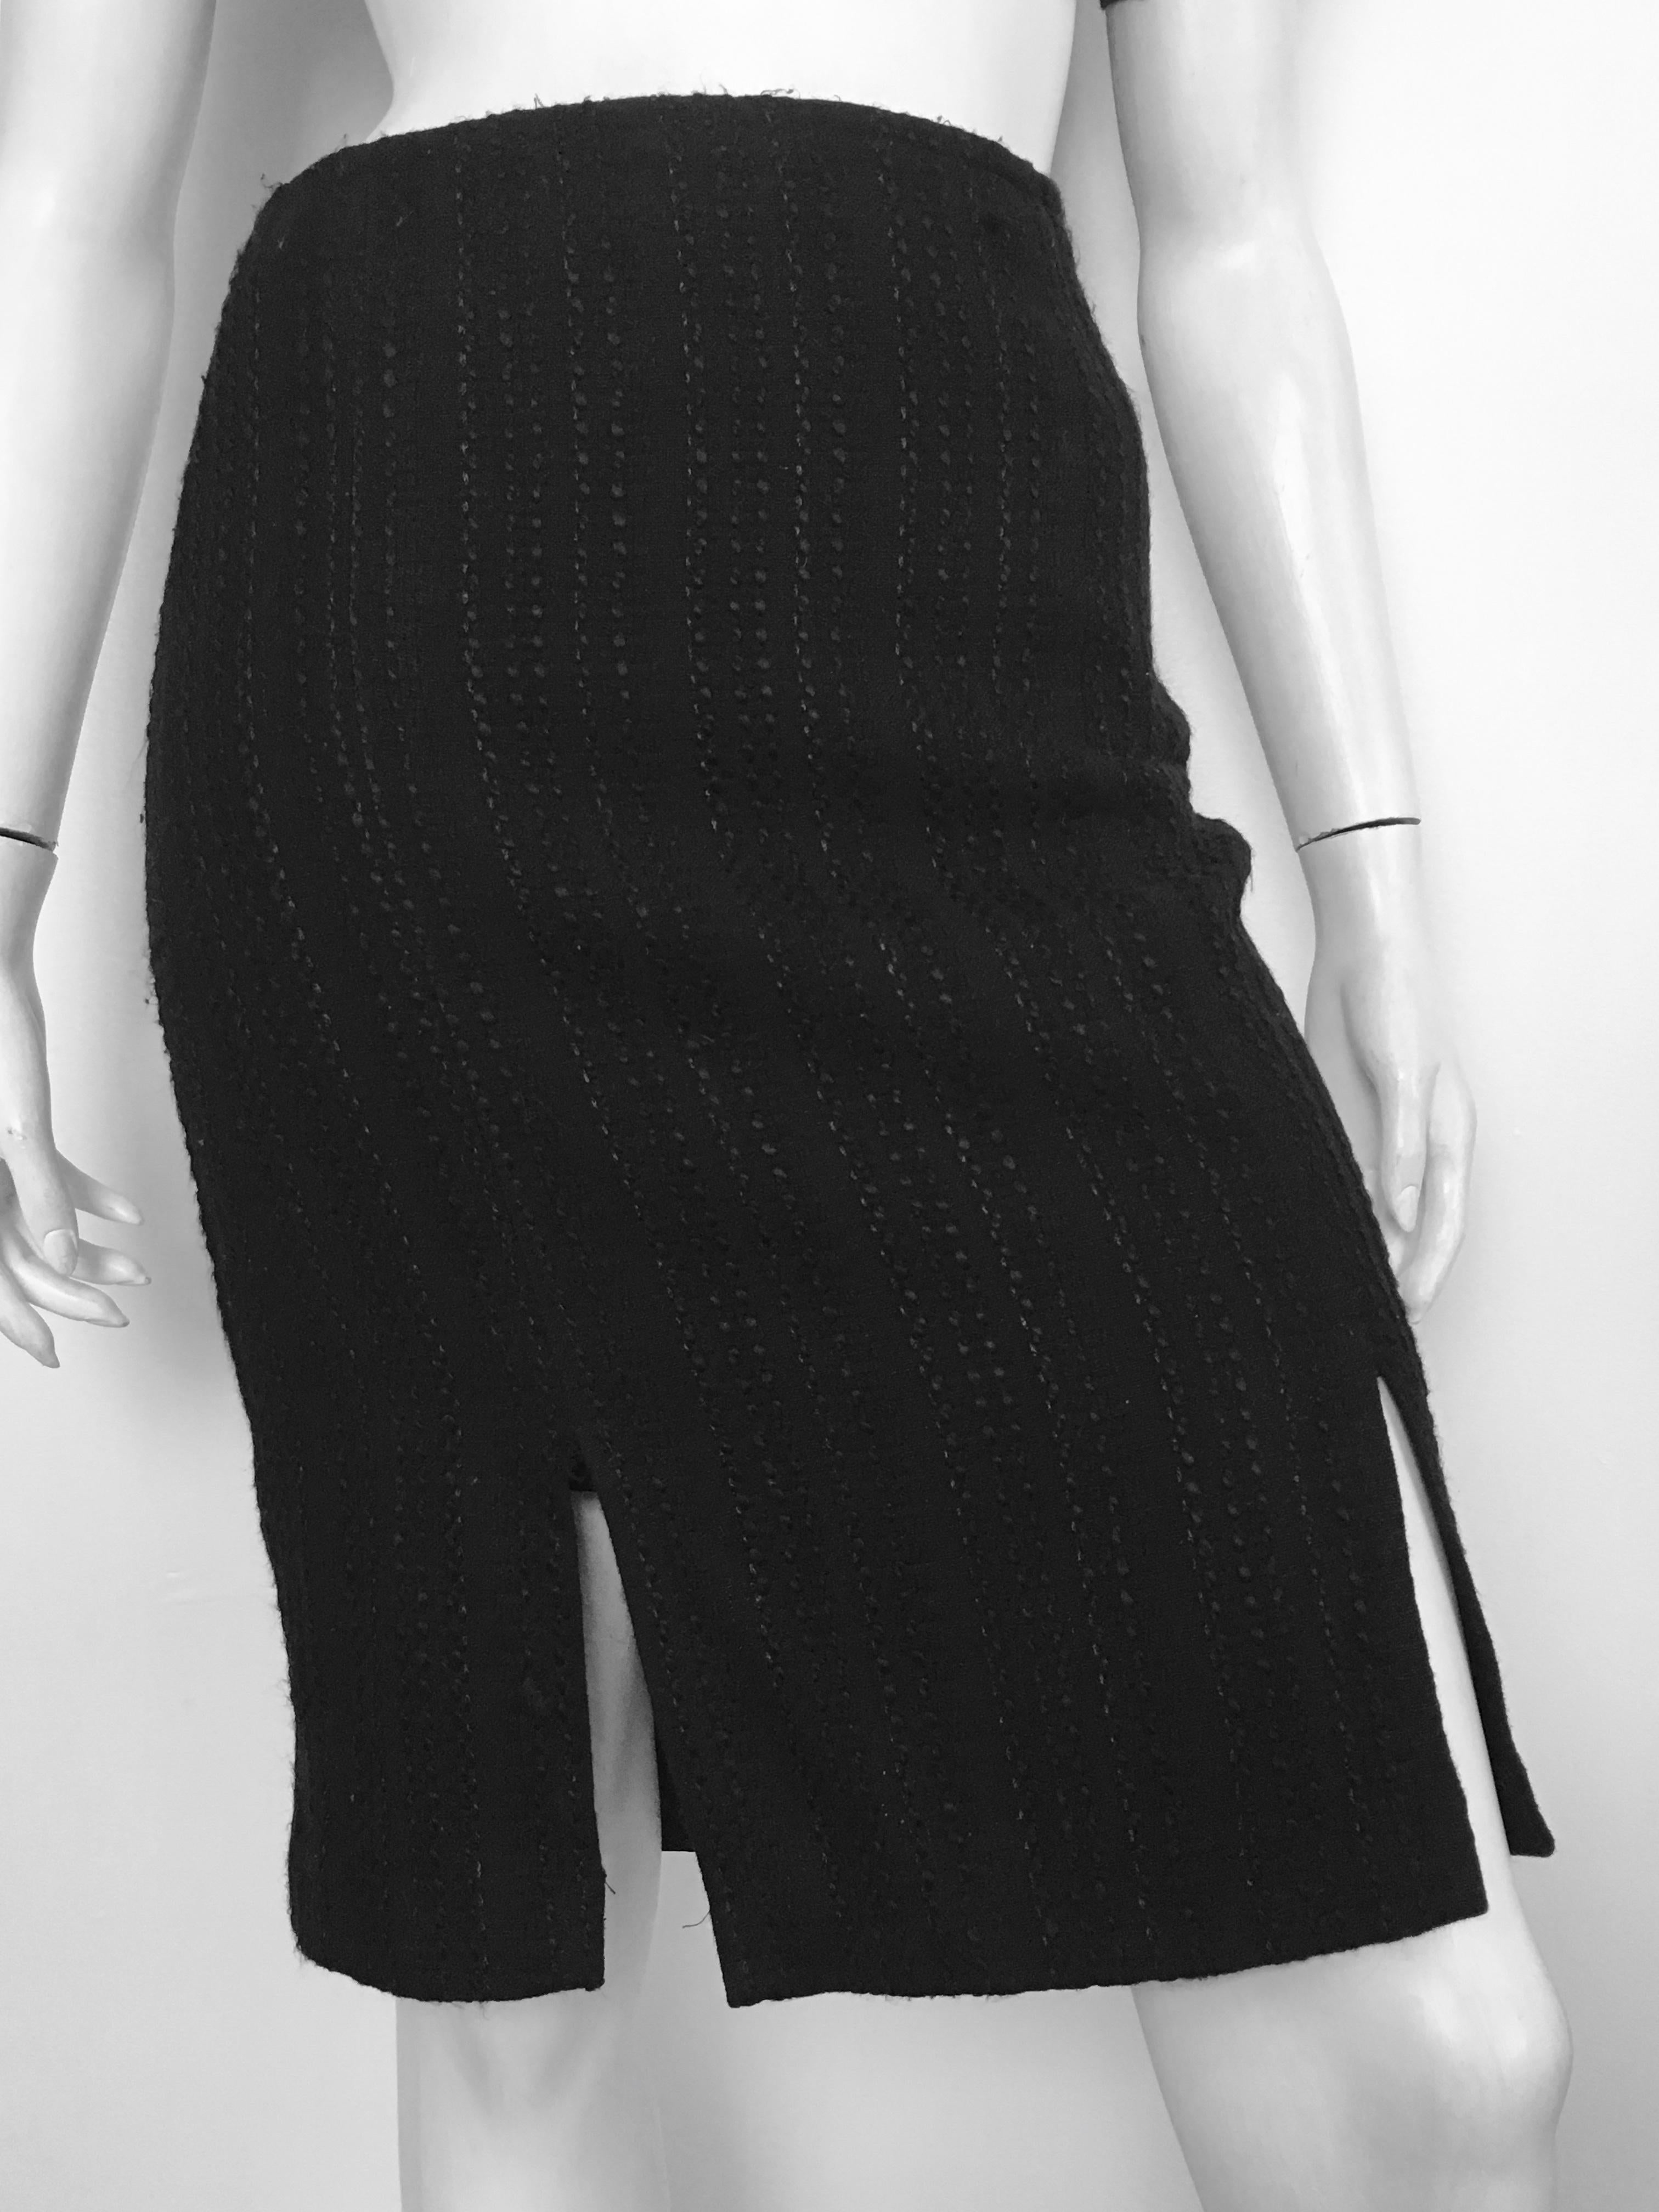 Pierre Cardin 1990s Black Skirt Size 6. For Sale 5